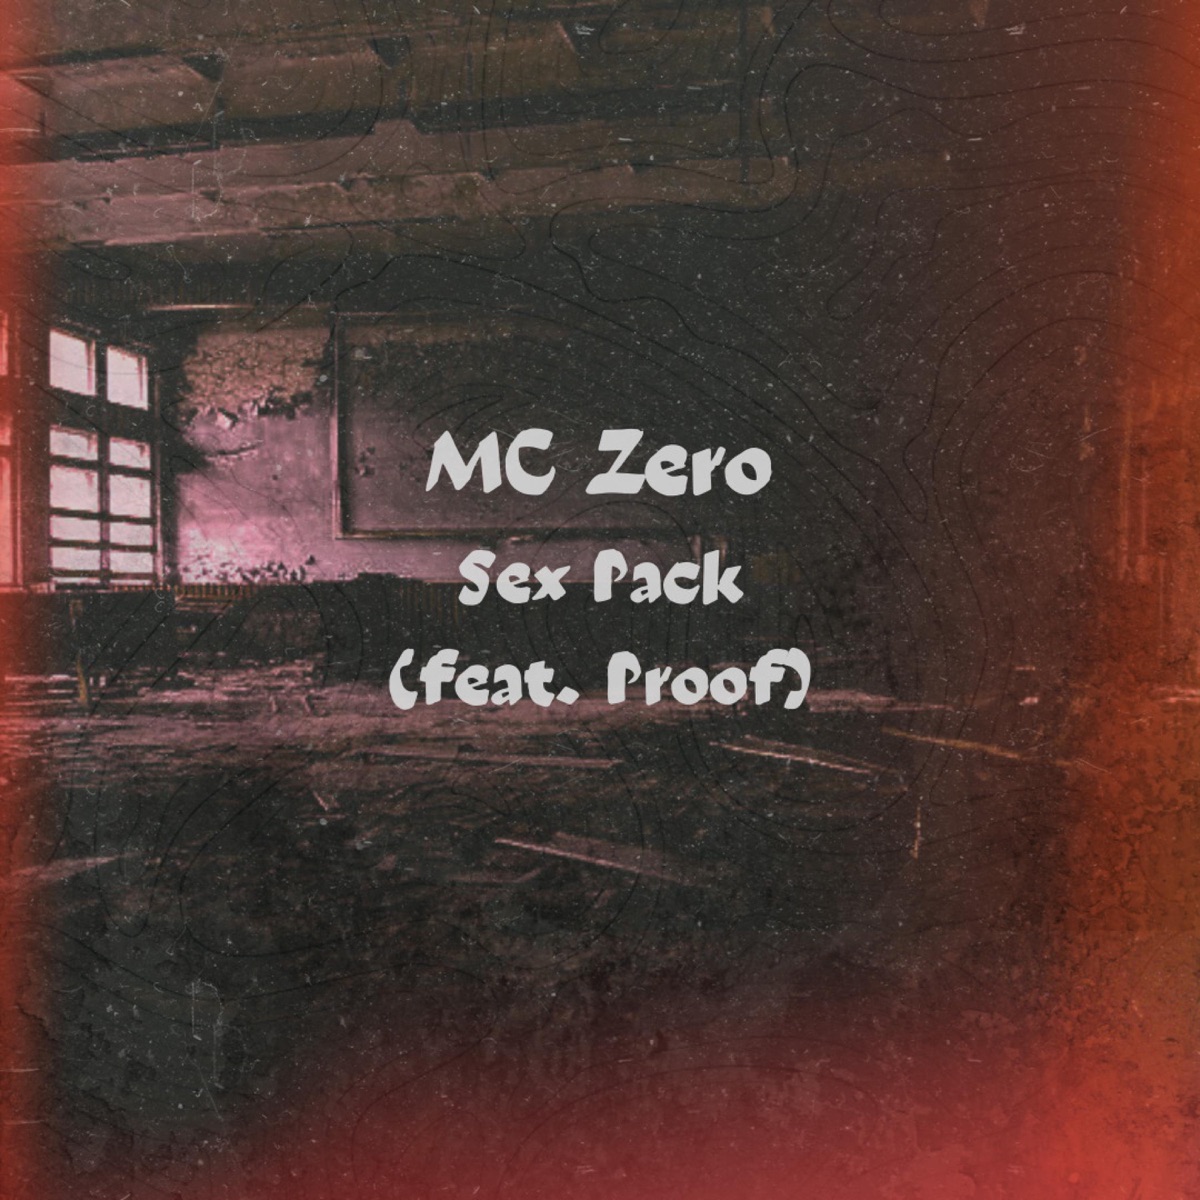 Sex Pack (feat. proof) - Single - Album by MC Zero - Apple Music